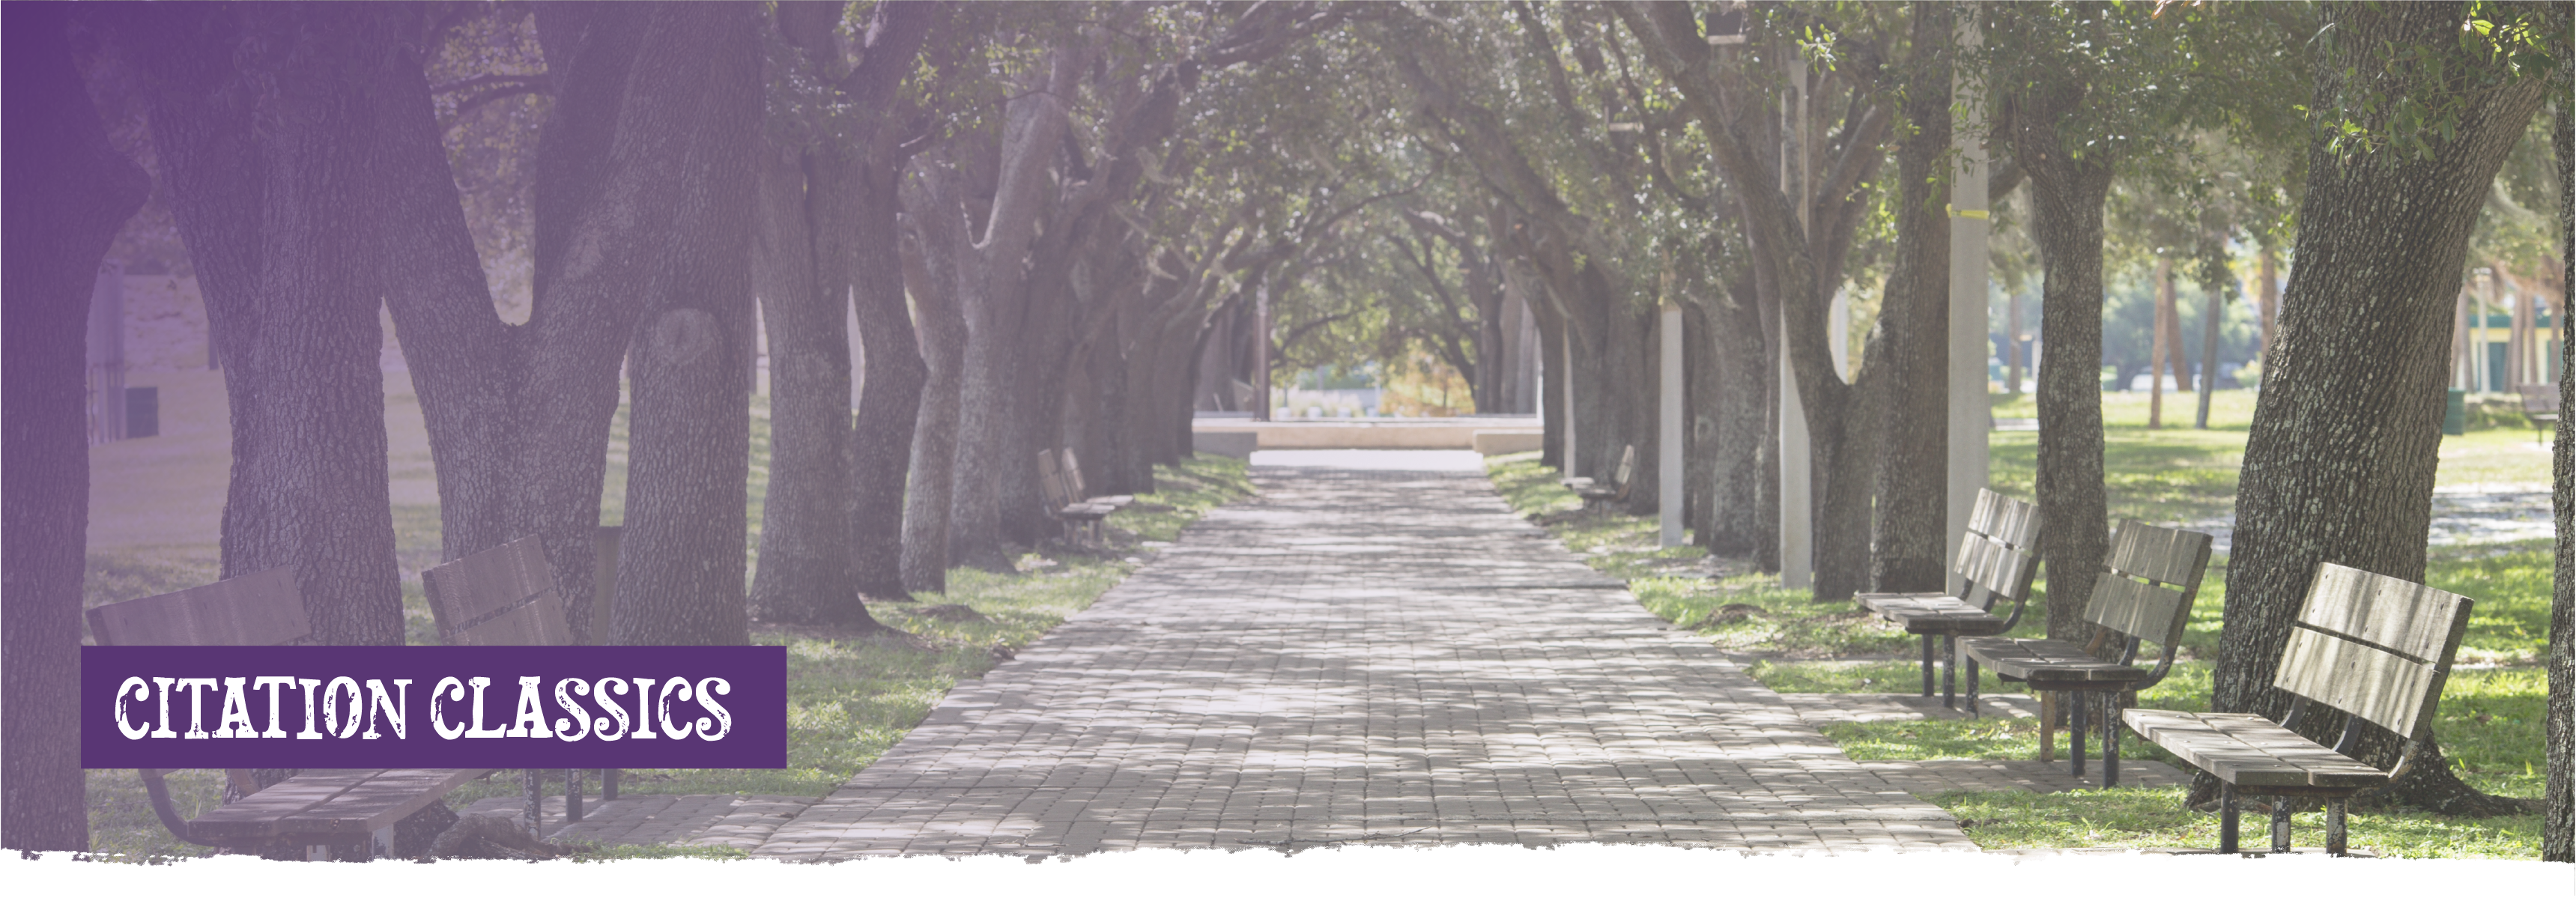 Tree-lined pathway on campus; Citation Classics